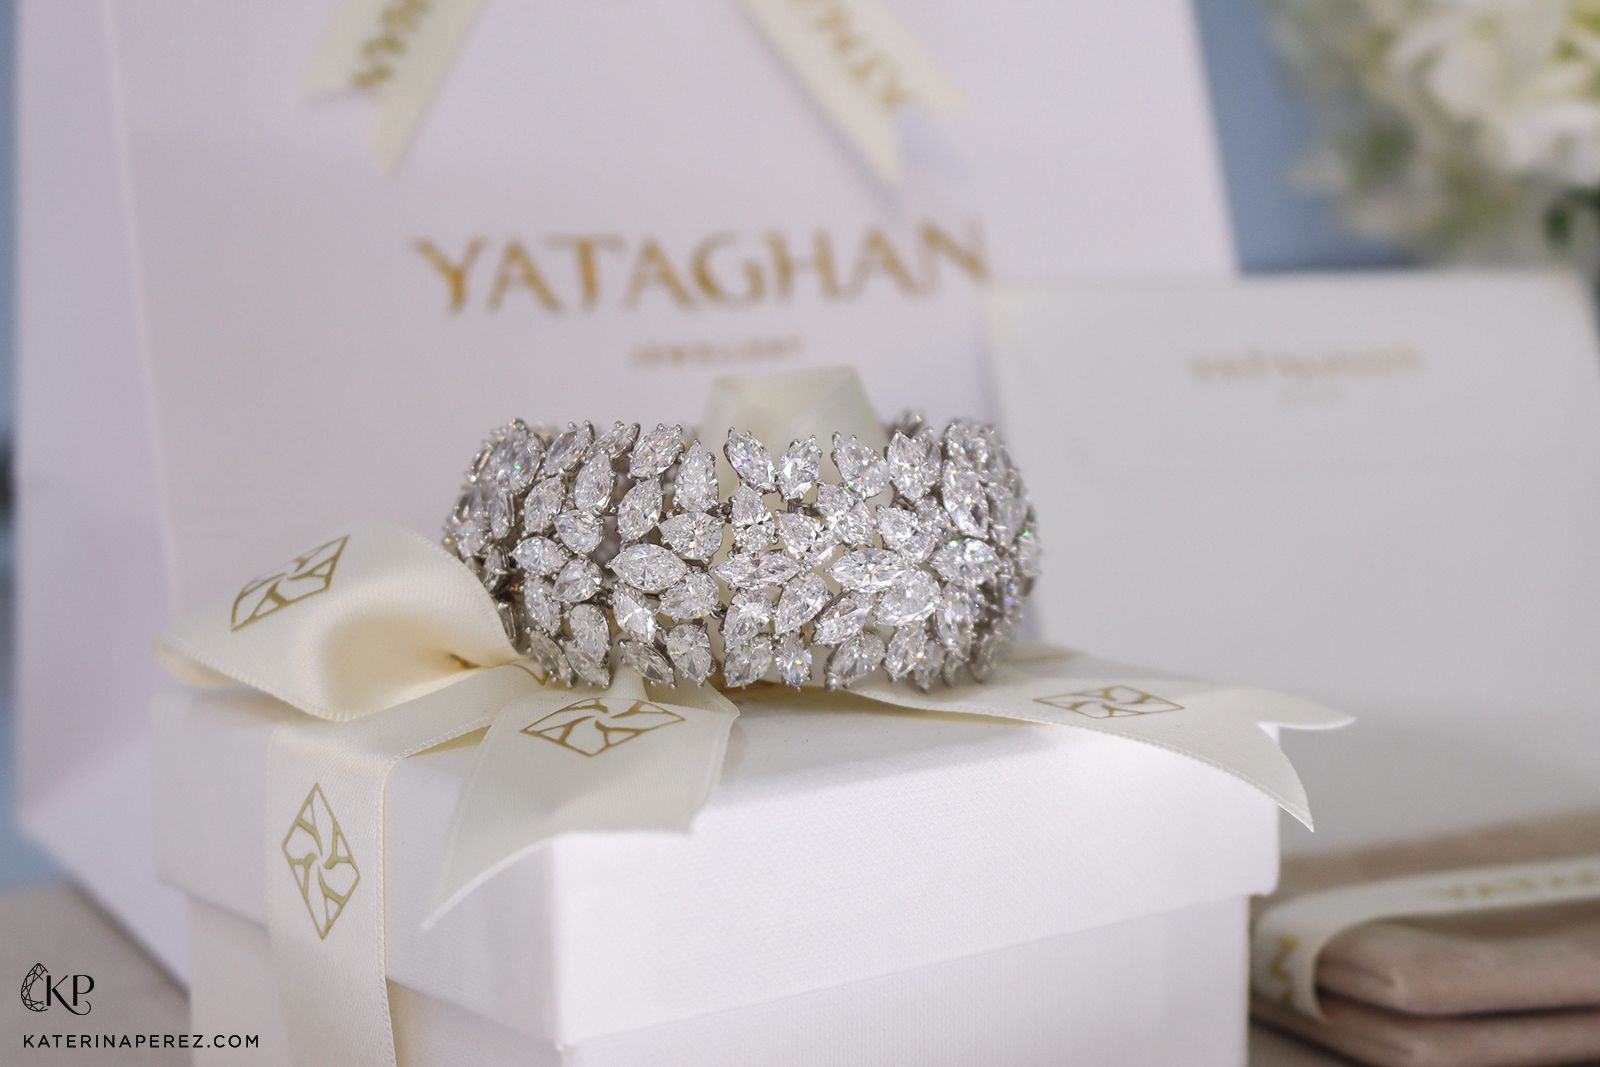 Браслет Yataghan с бриллиантами огранки "груша" и "маркиза"